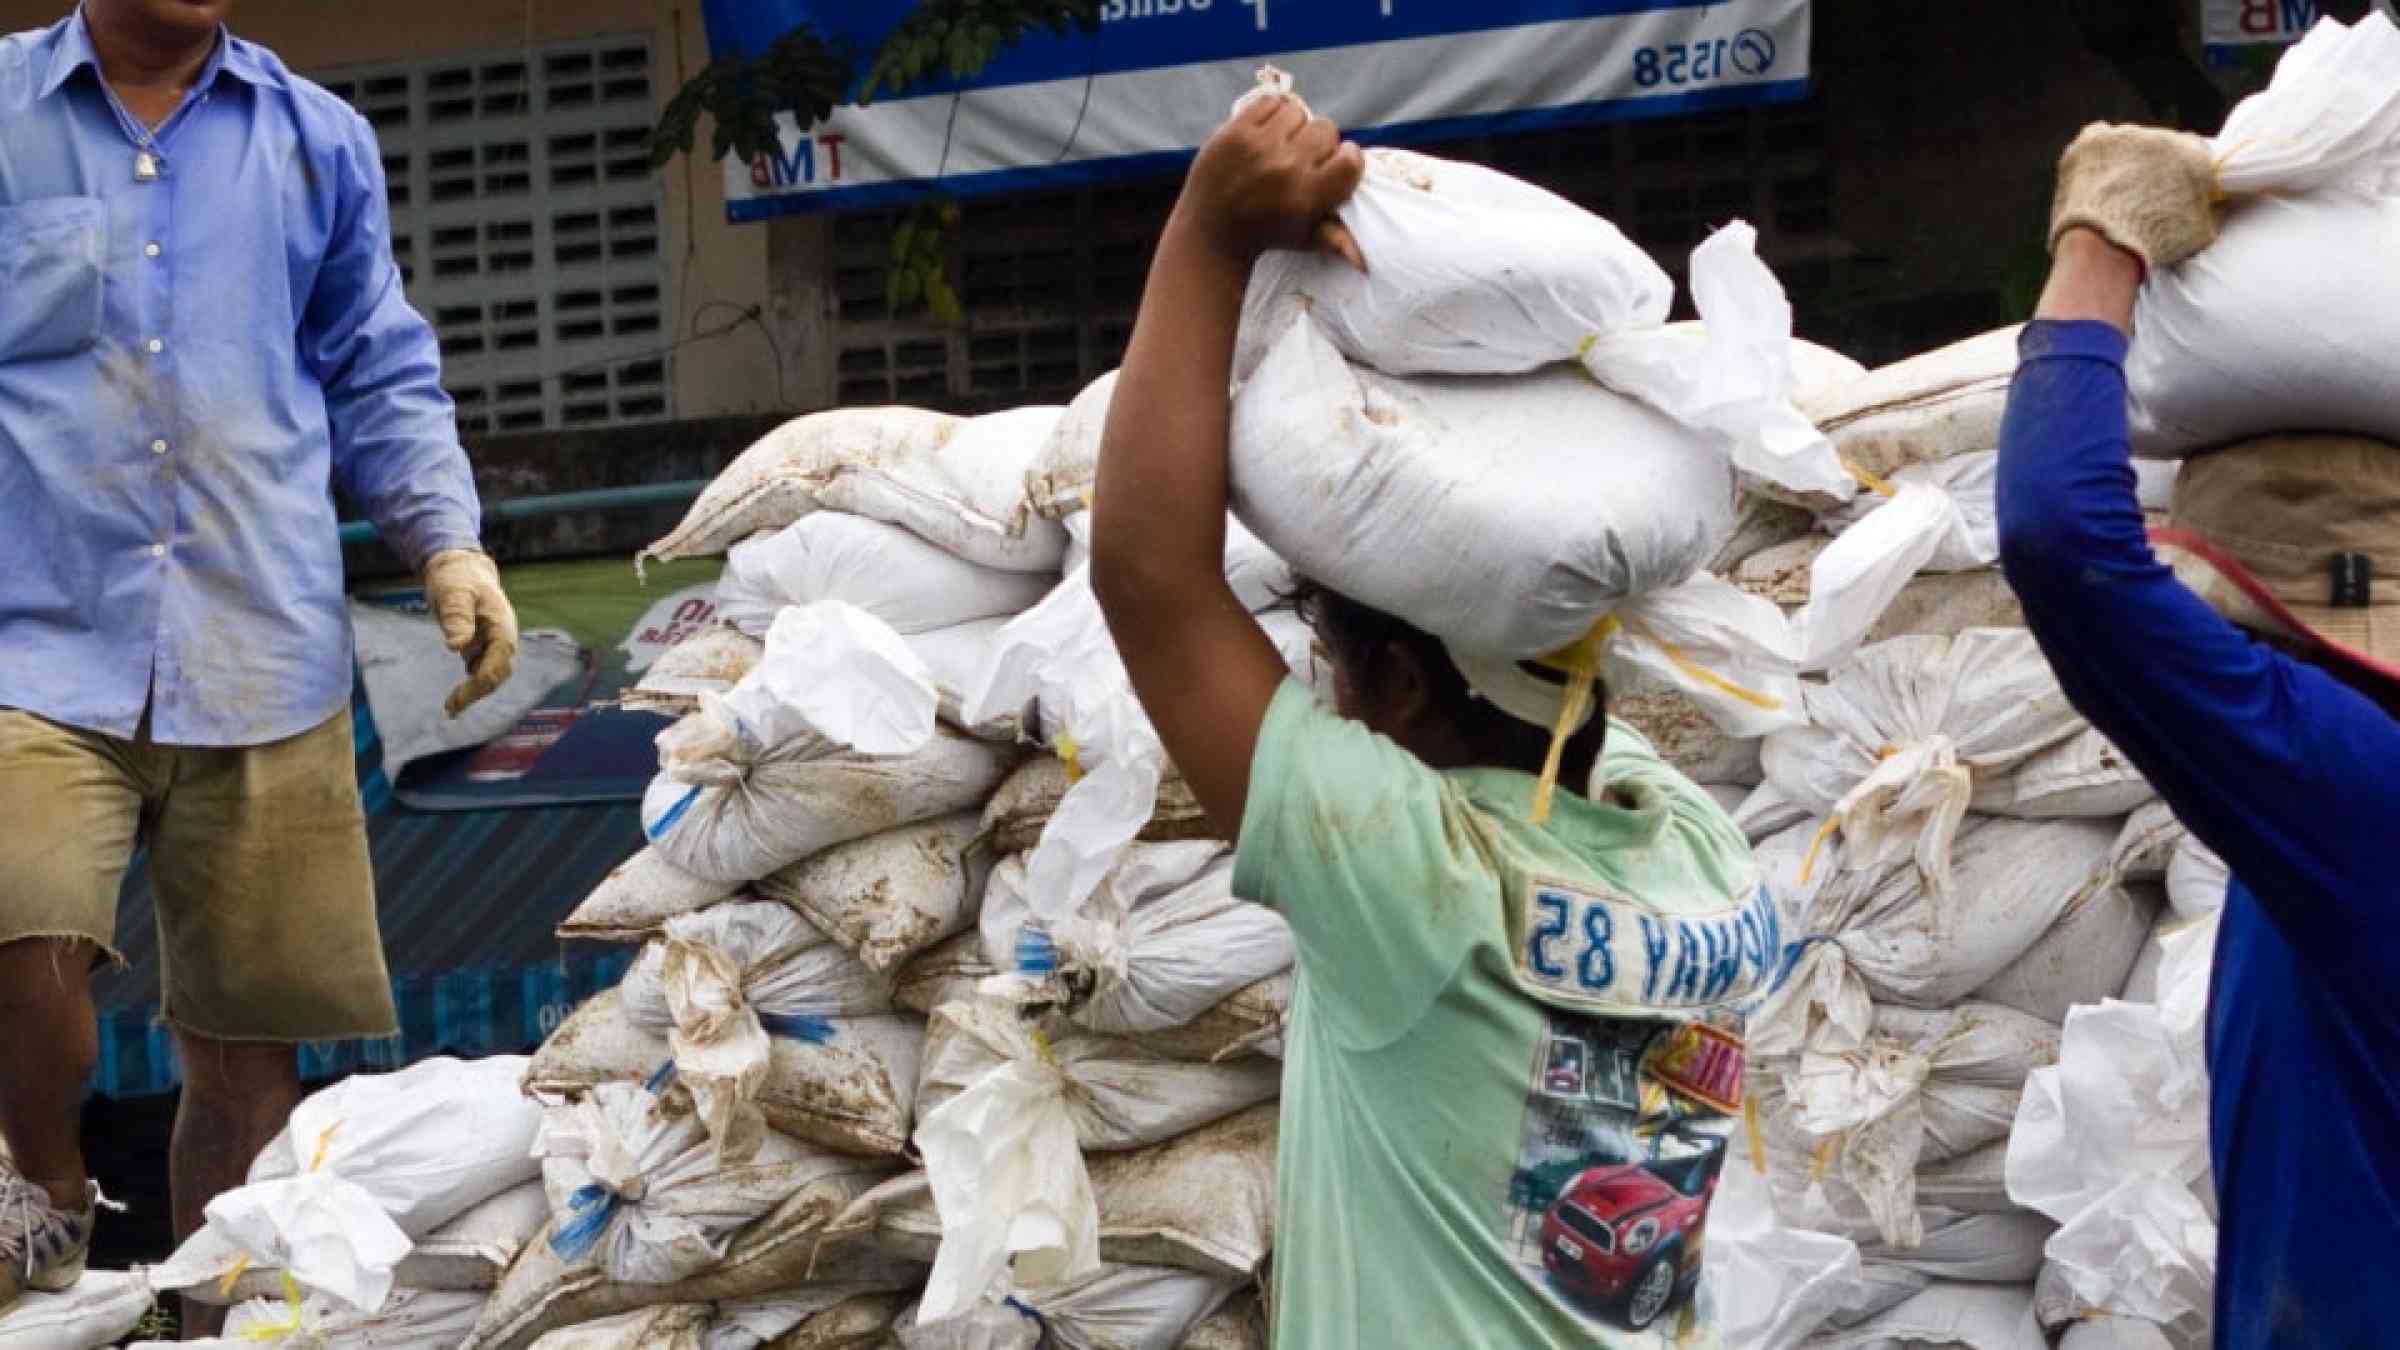  People bringing sandbags to prevent flooding in Bangkok, Thailand